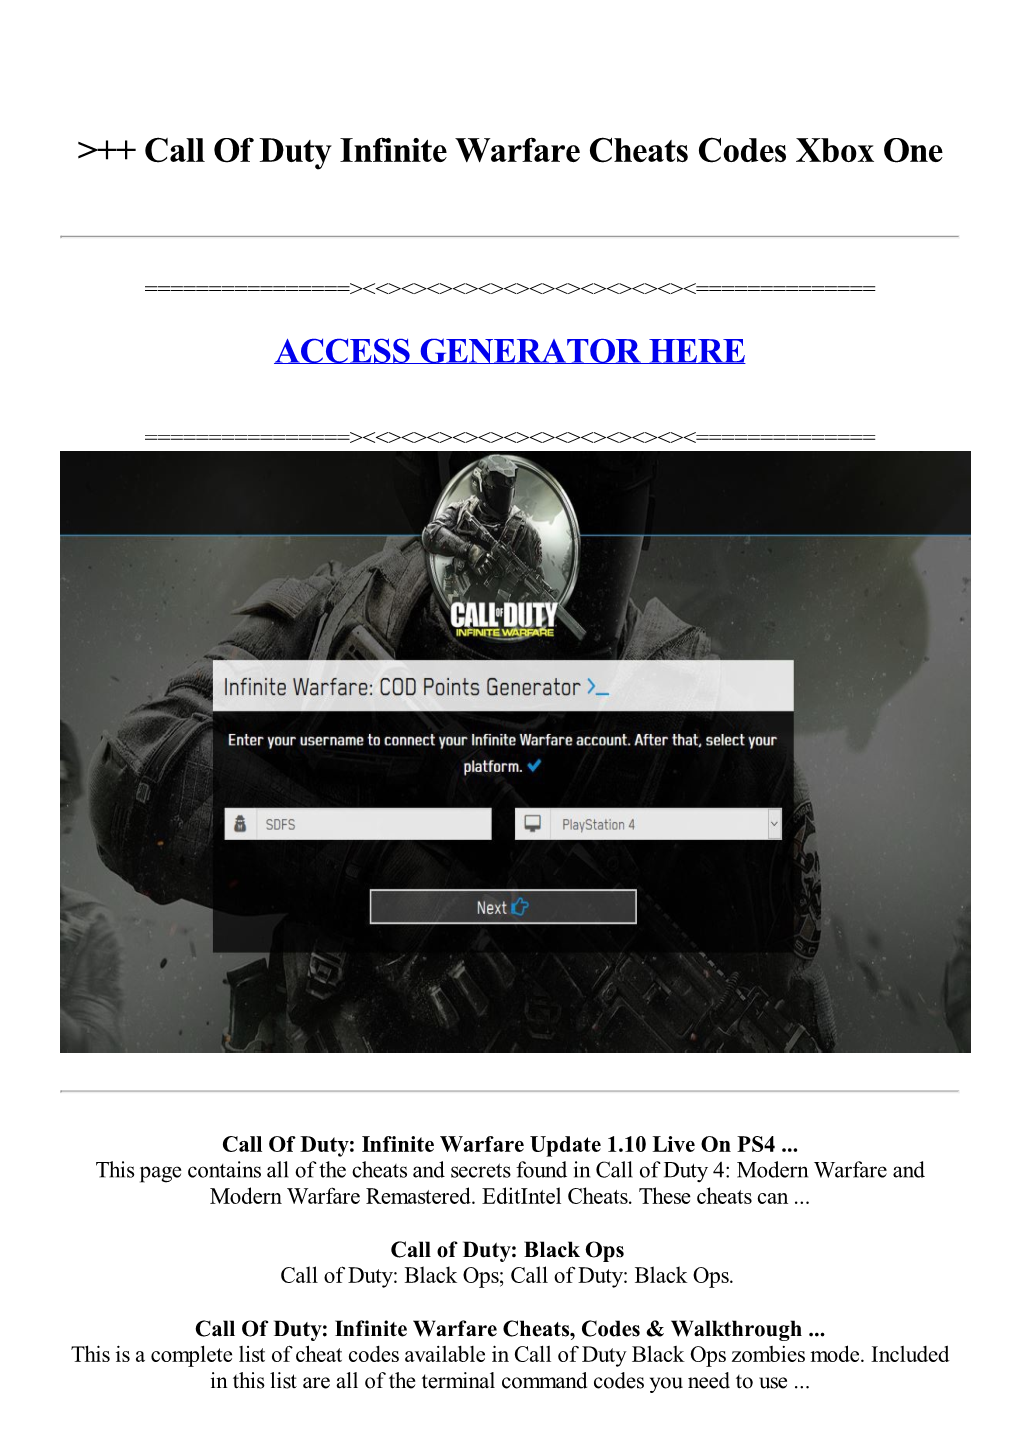 **++ Call of Duty Infinite Warfare Cheats Codes Xbox One